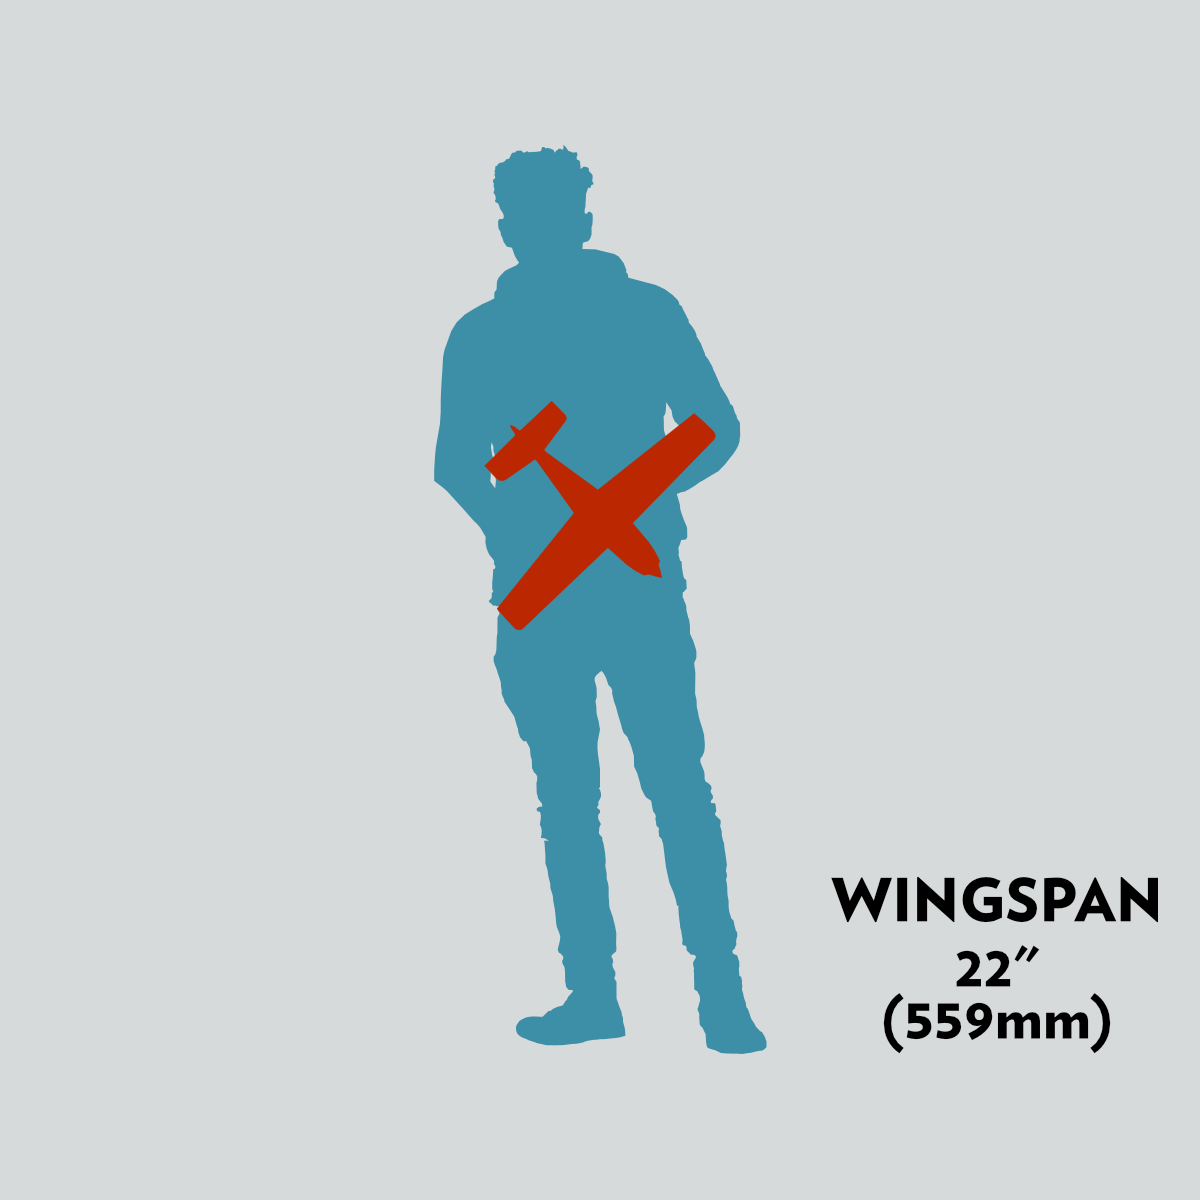 22" (559mm) Wingspan